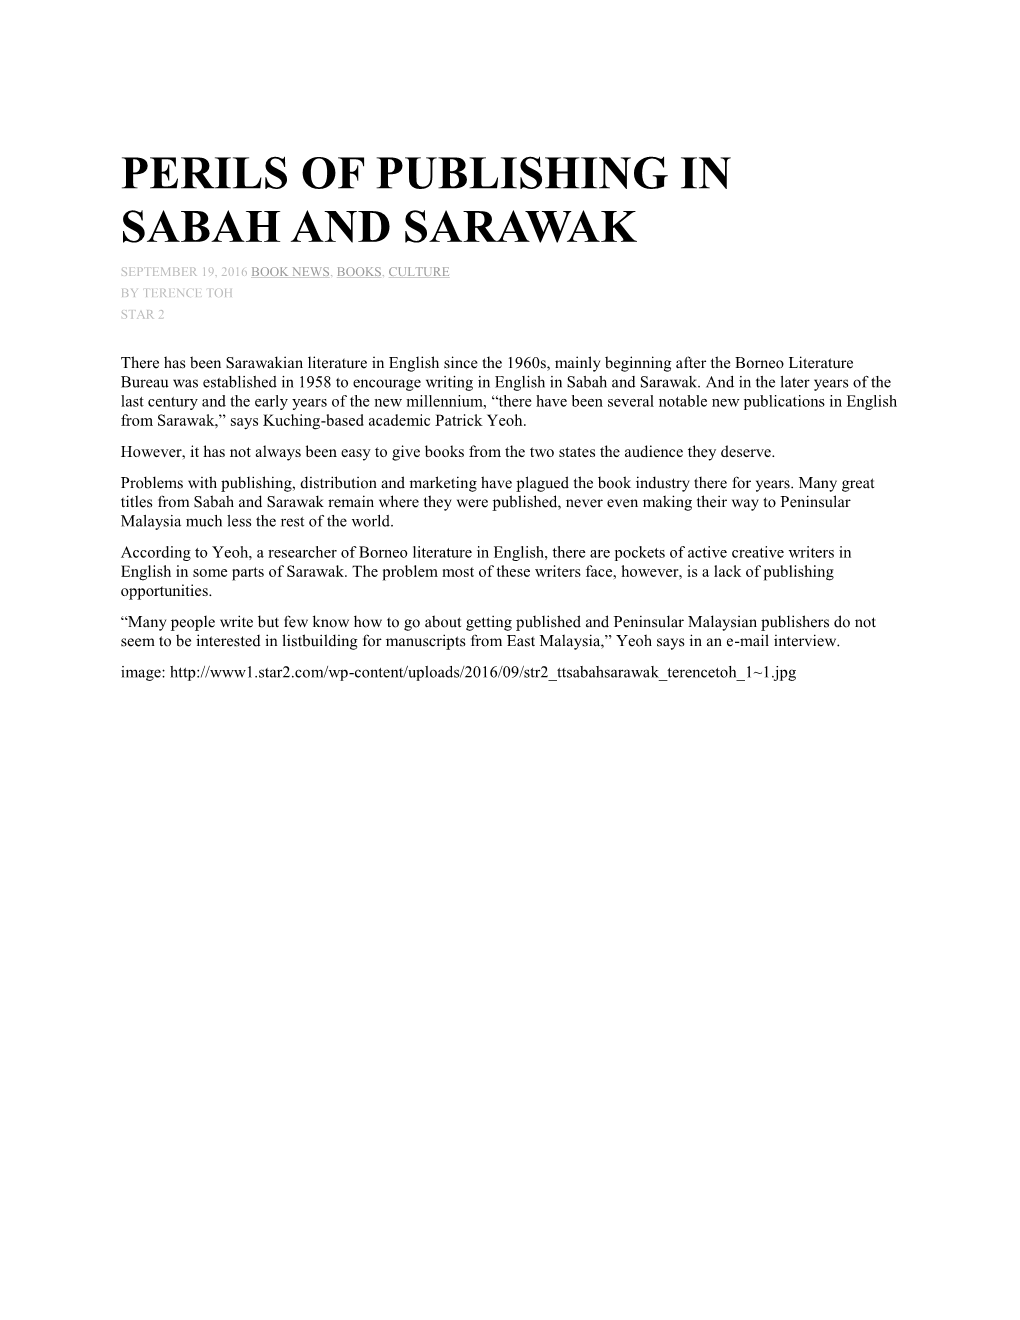 Perils of Publishing in Sabah and Sarawak